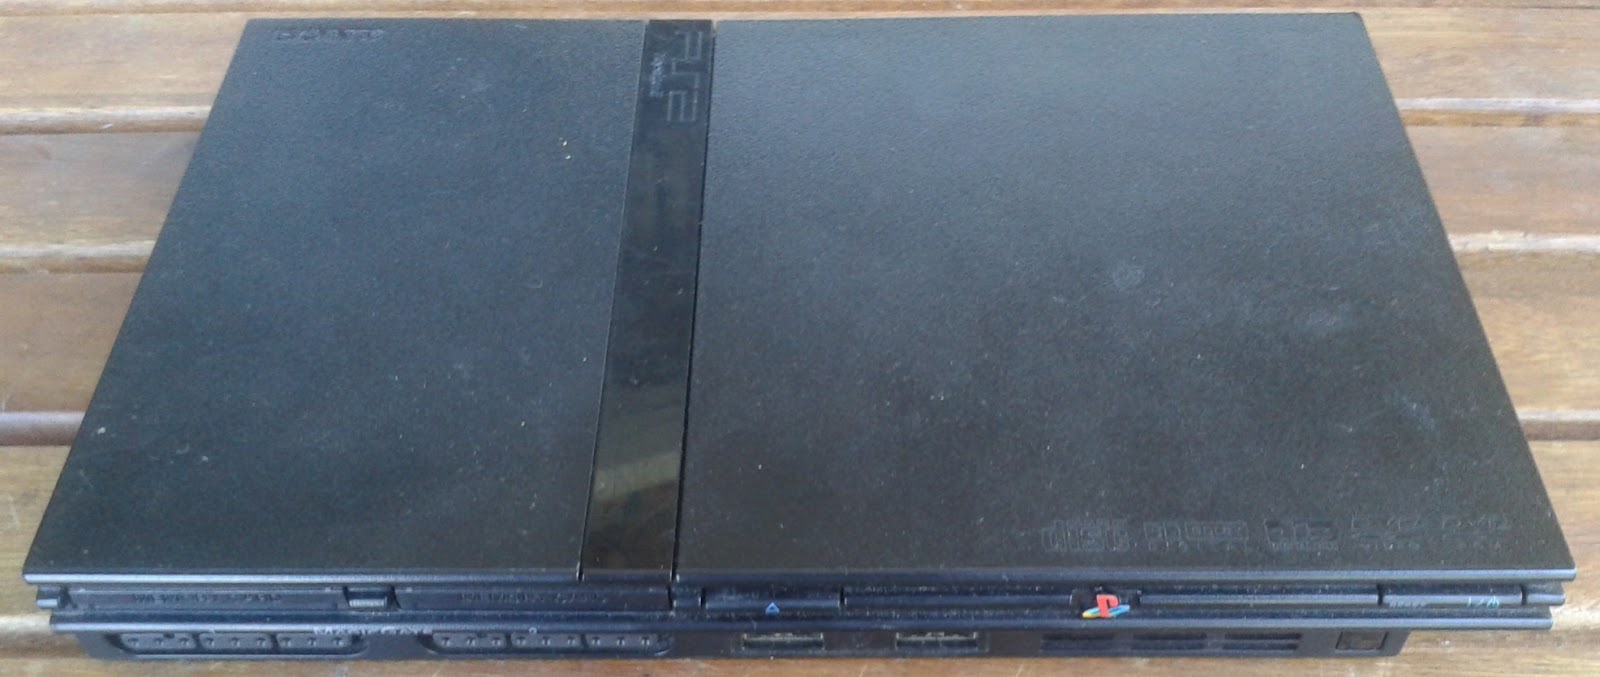 Retro Ordenadores Orty: Consola PlayStation 2 Slim (modelo SCPH 77004)  (2005)